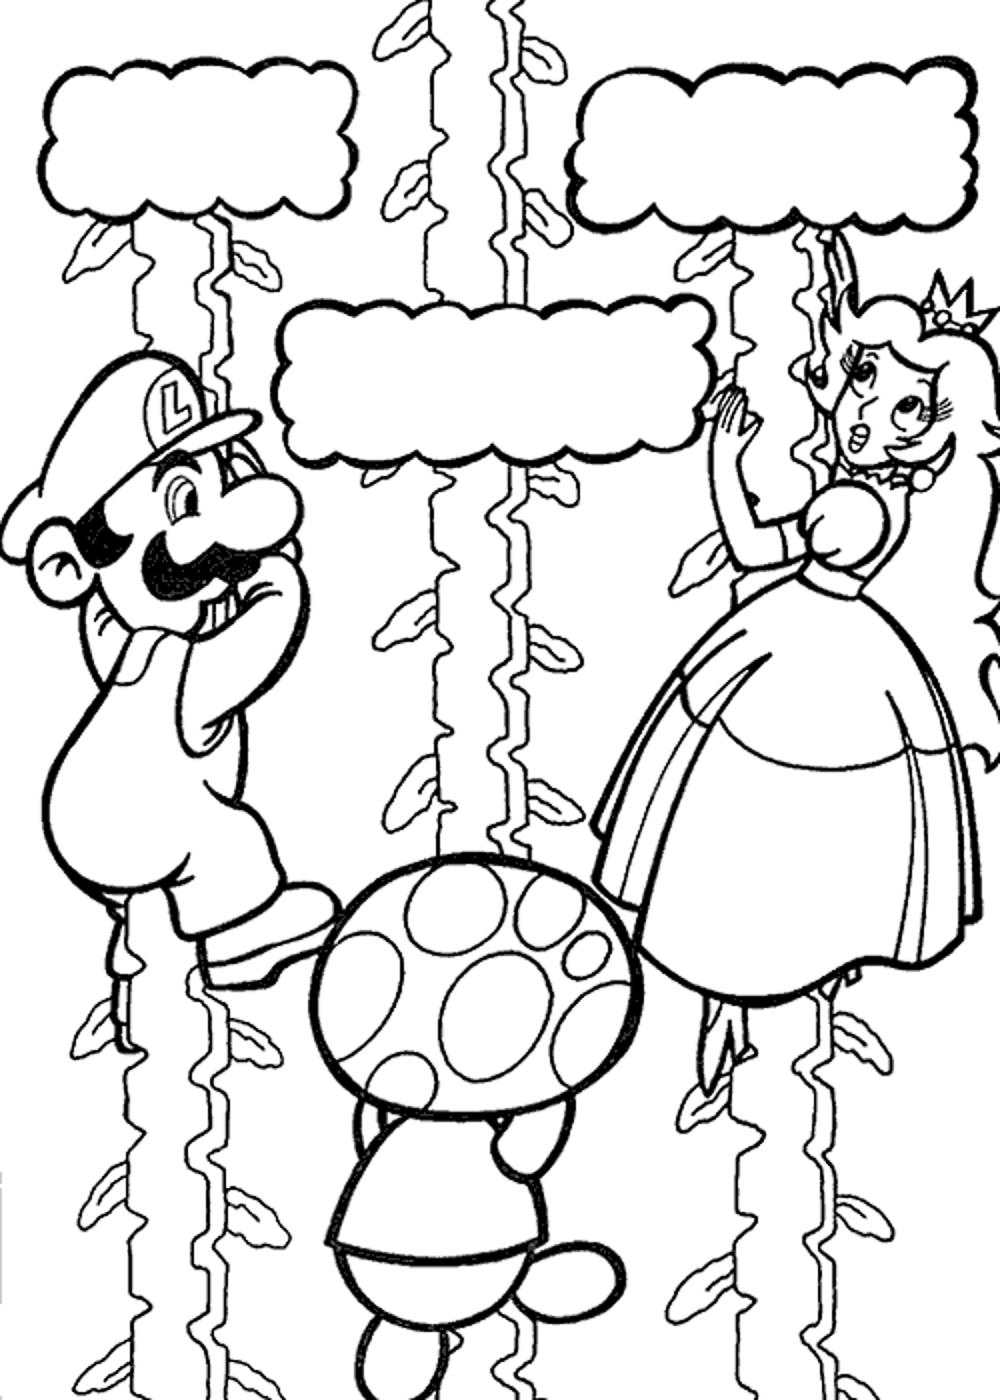 894 Cartoon Mario Galaxy Coloring Pages with Printable